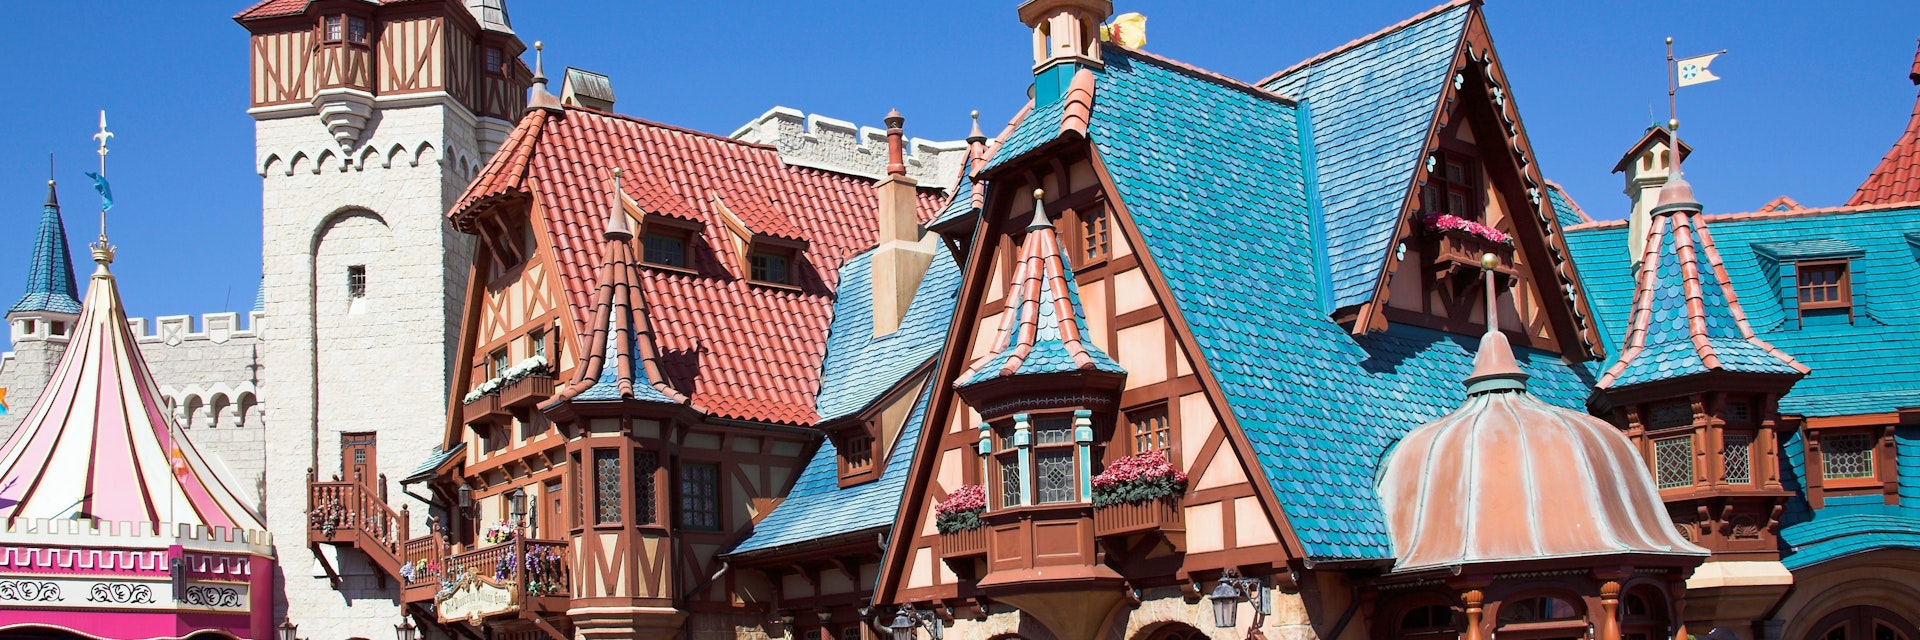 Pinocchio Village Haus Restaurant, Fantasyland, Magic Kingdom, Disney World, Orlando, Florida, USA